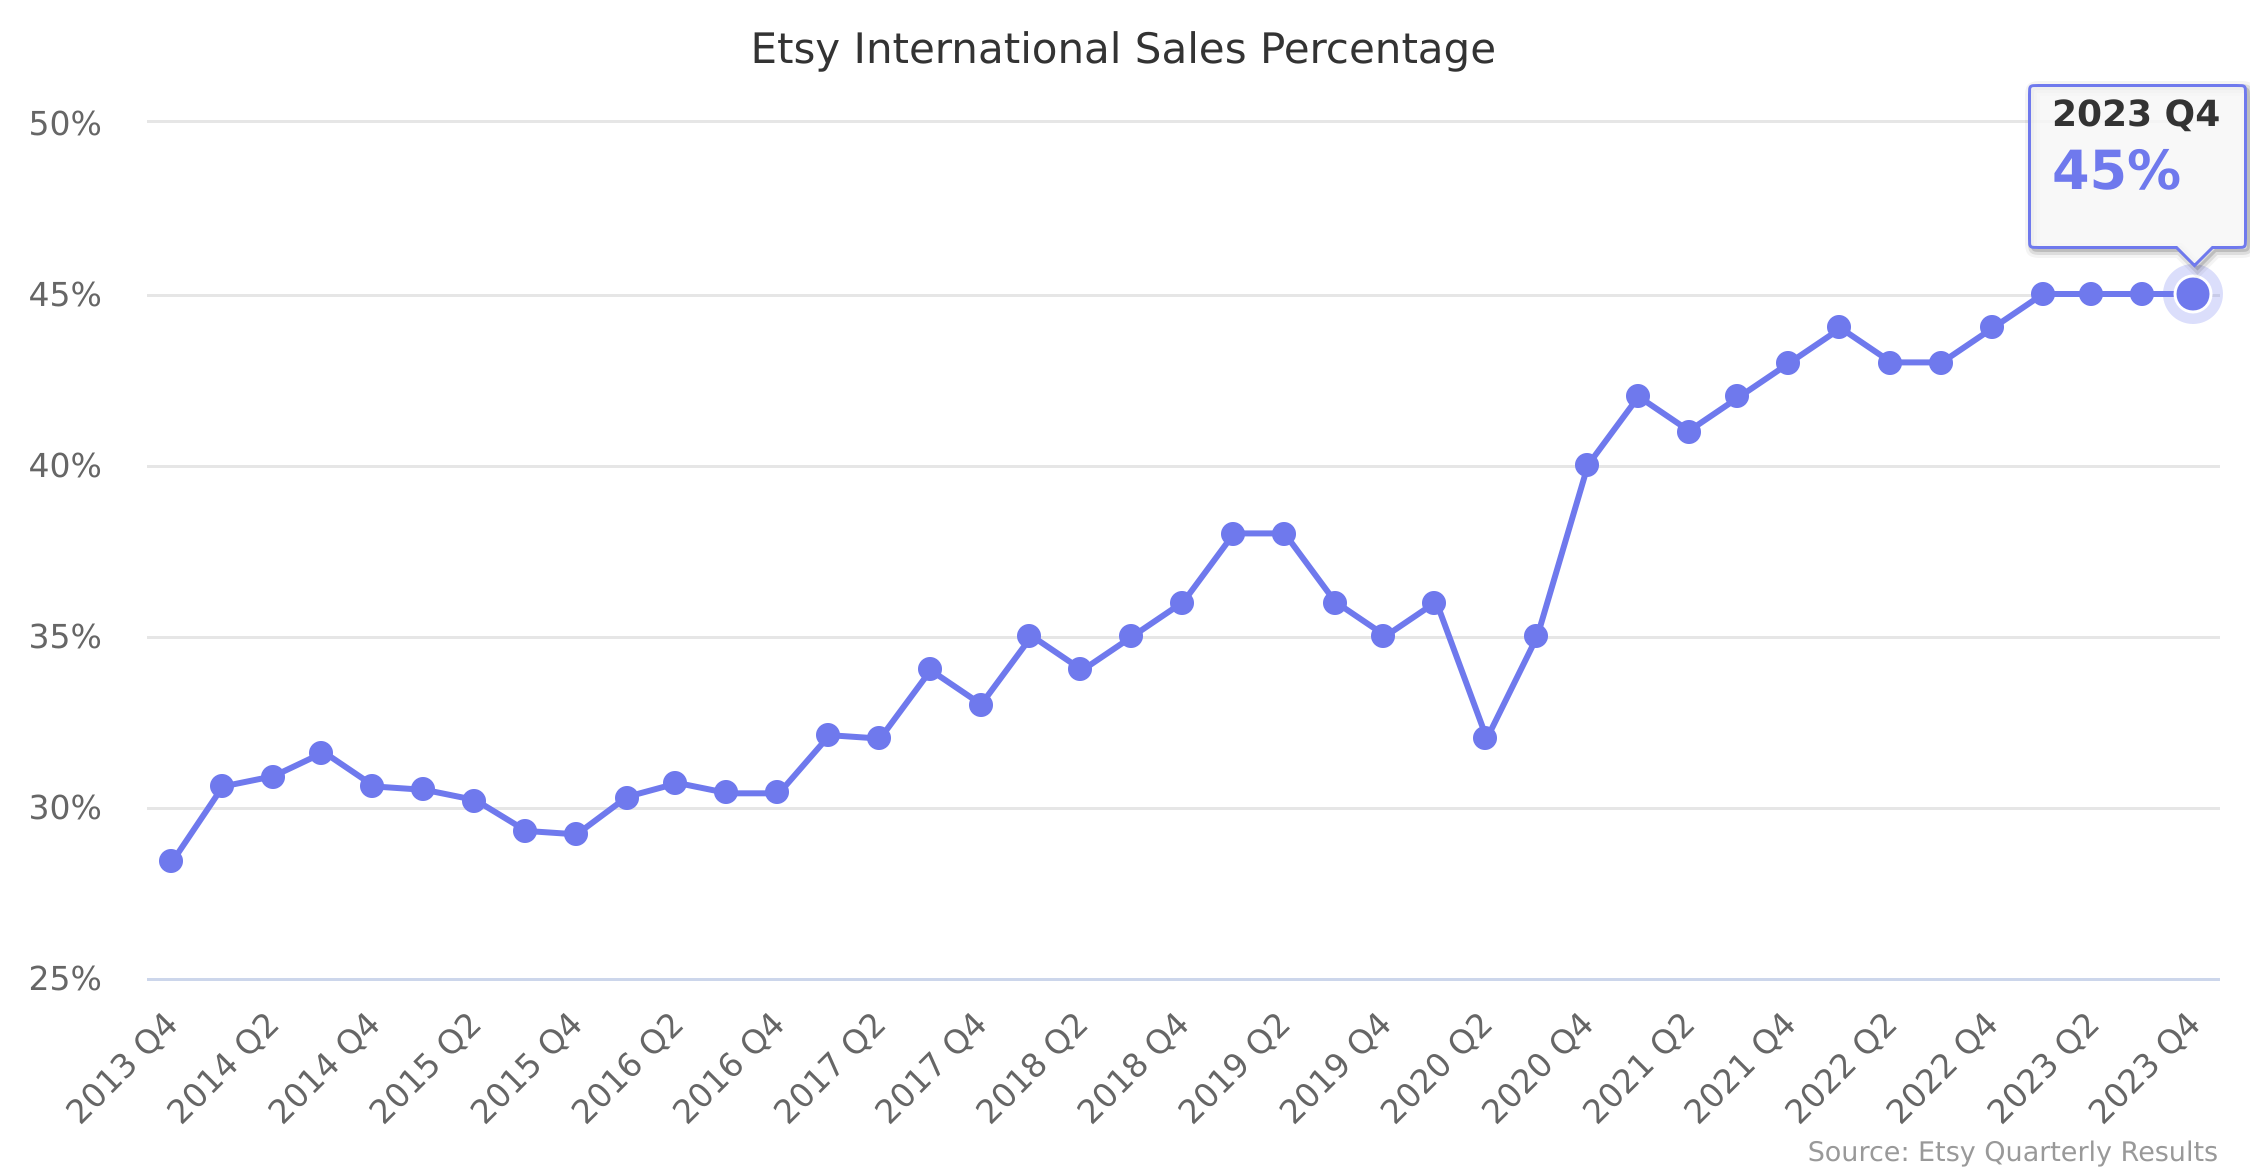 Etsy International Sales Percentage 2013-2023